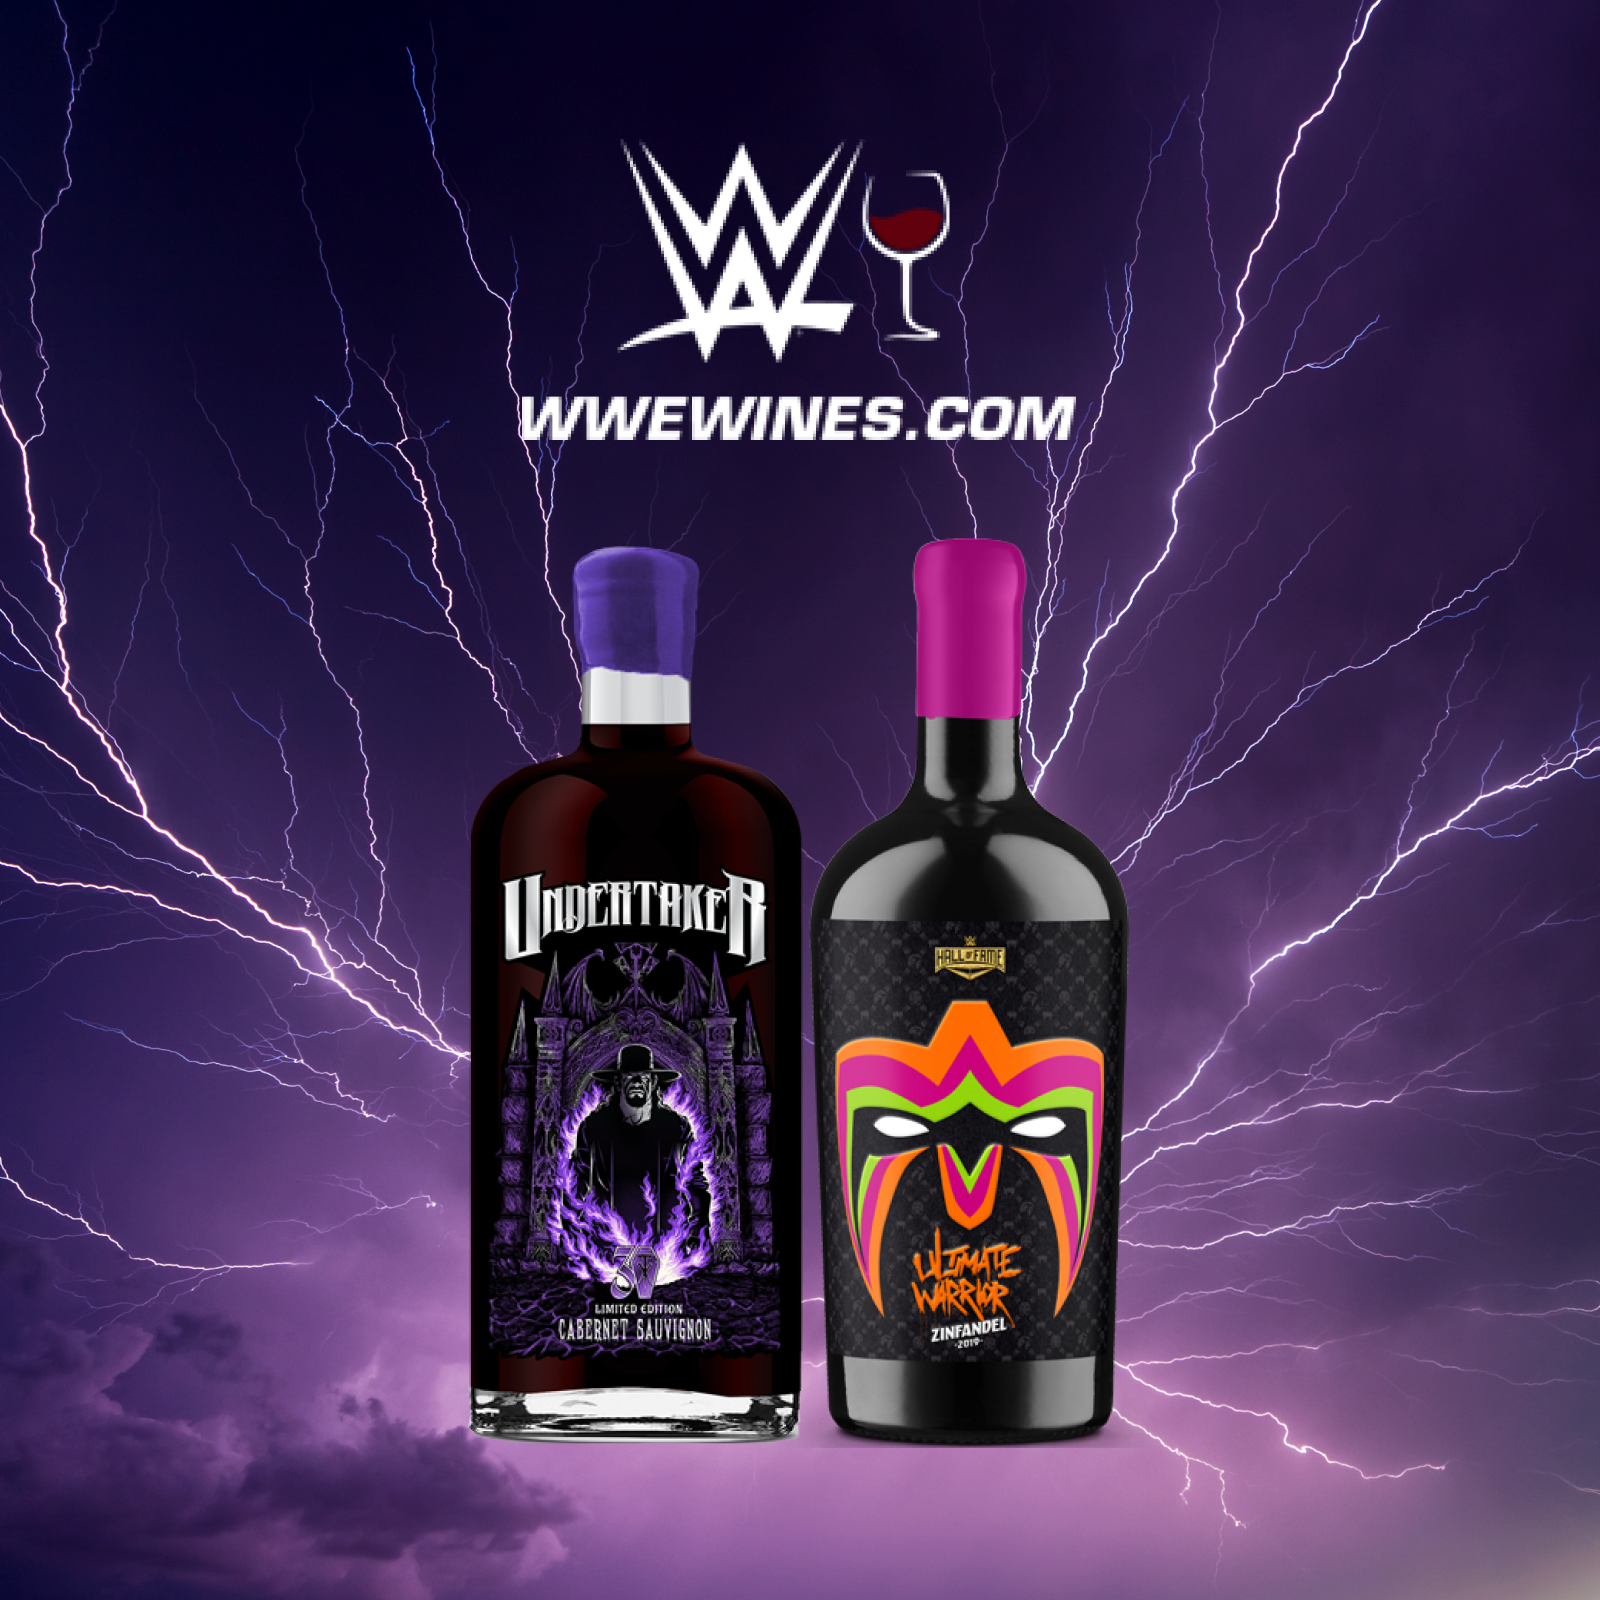 2 WWE Branded wine bottles